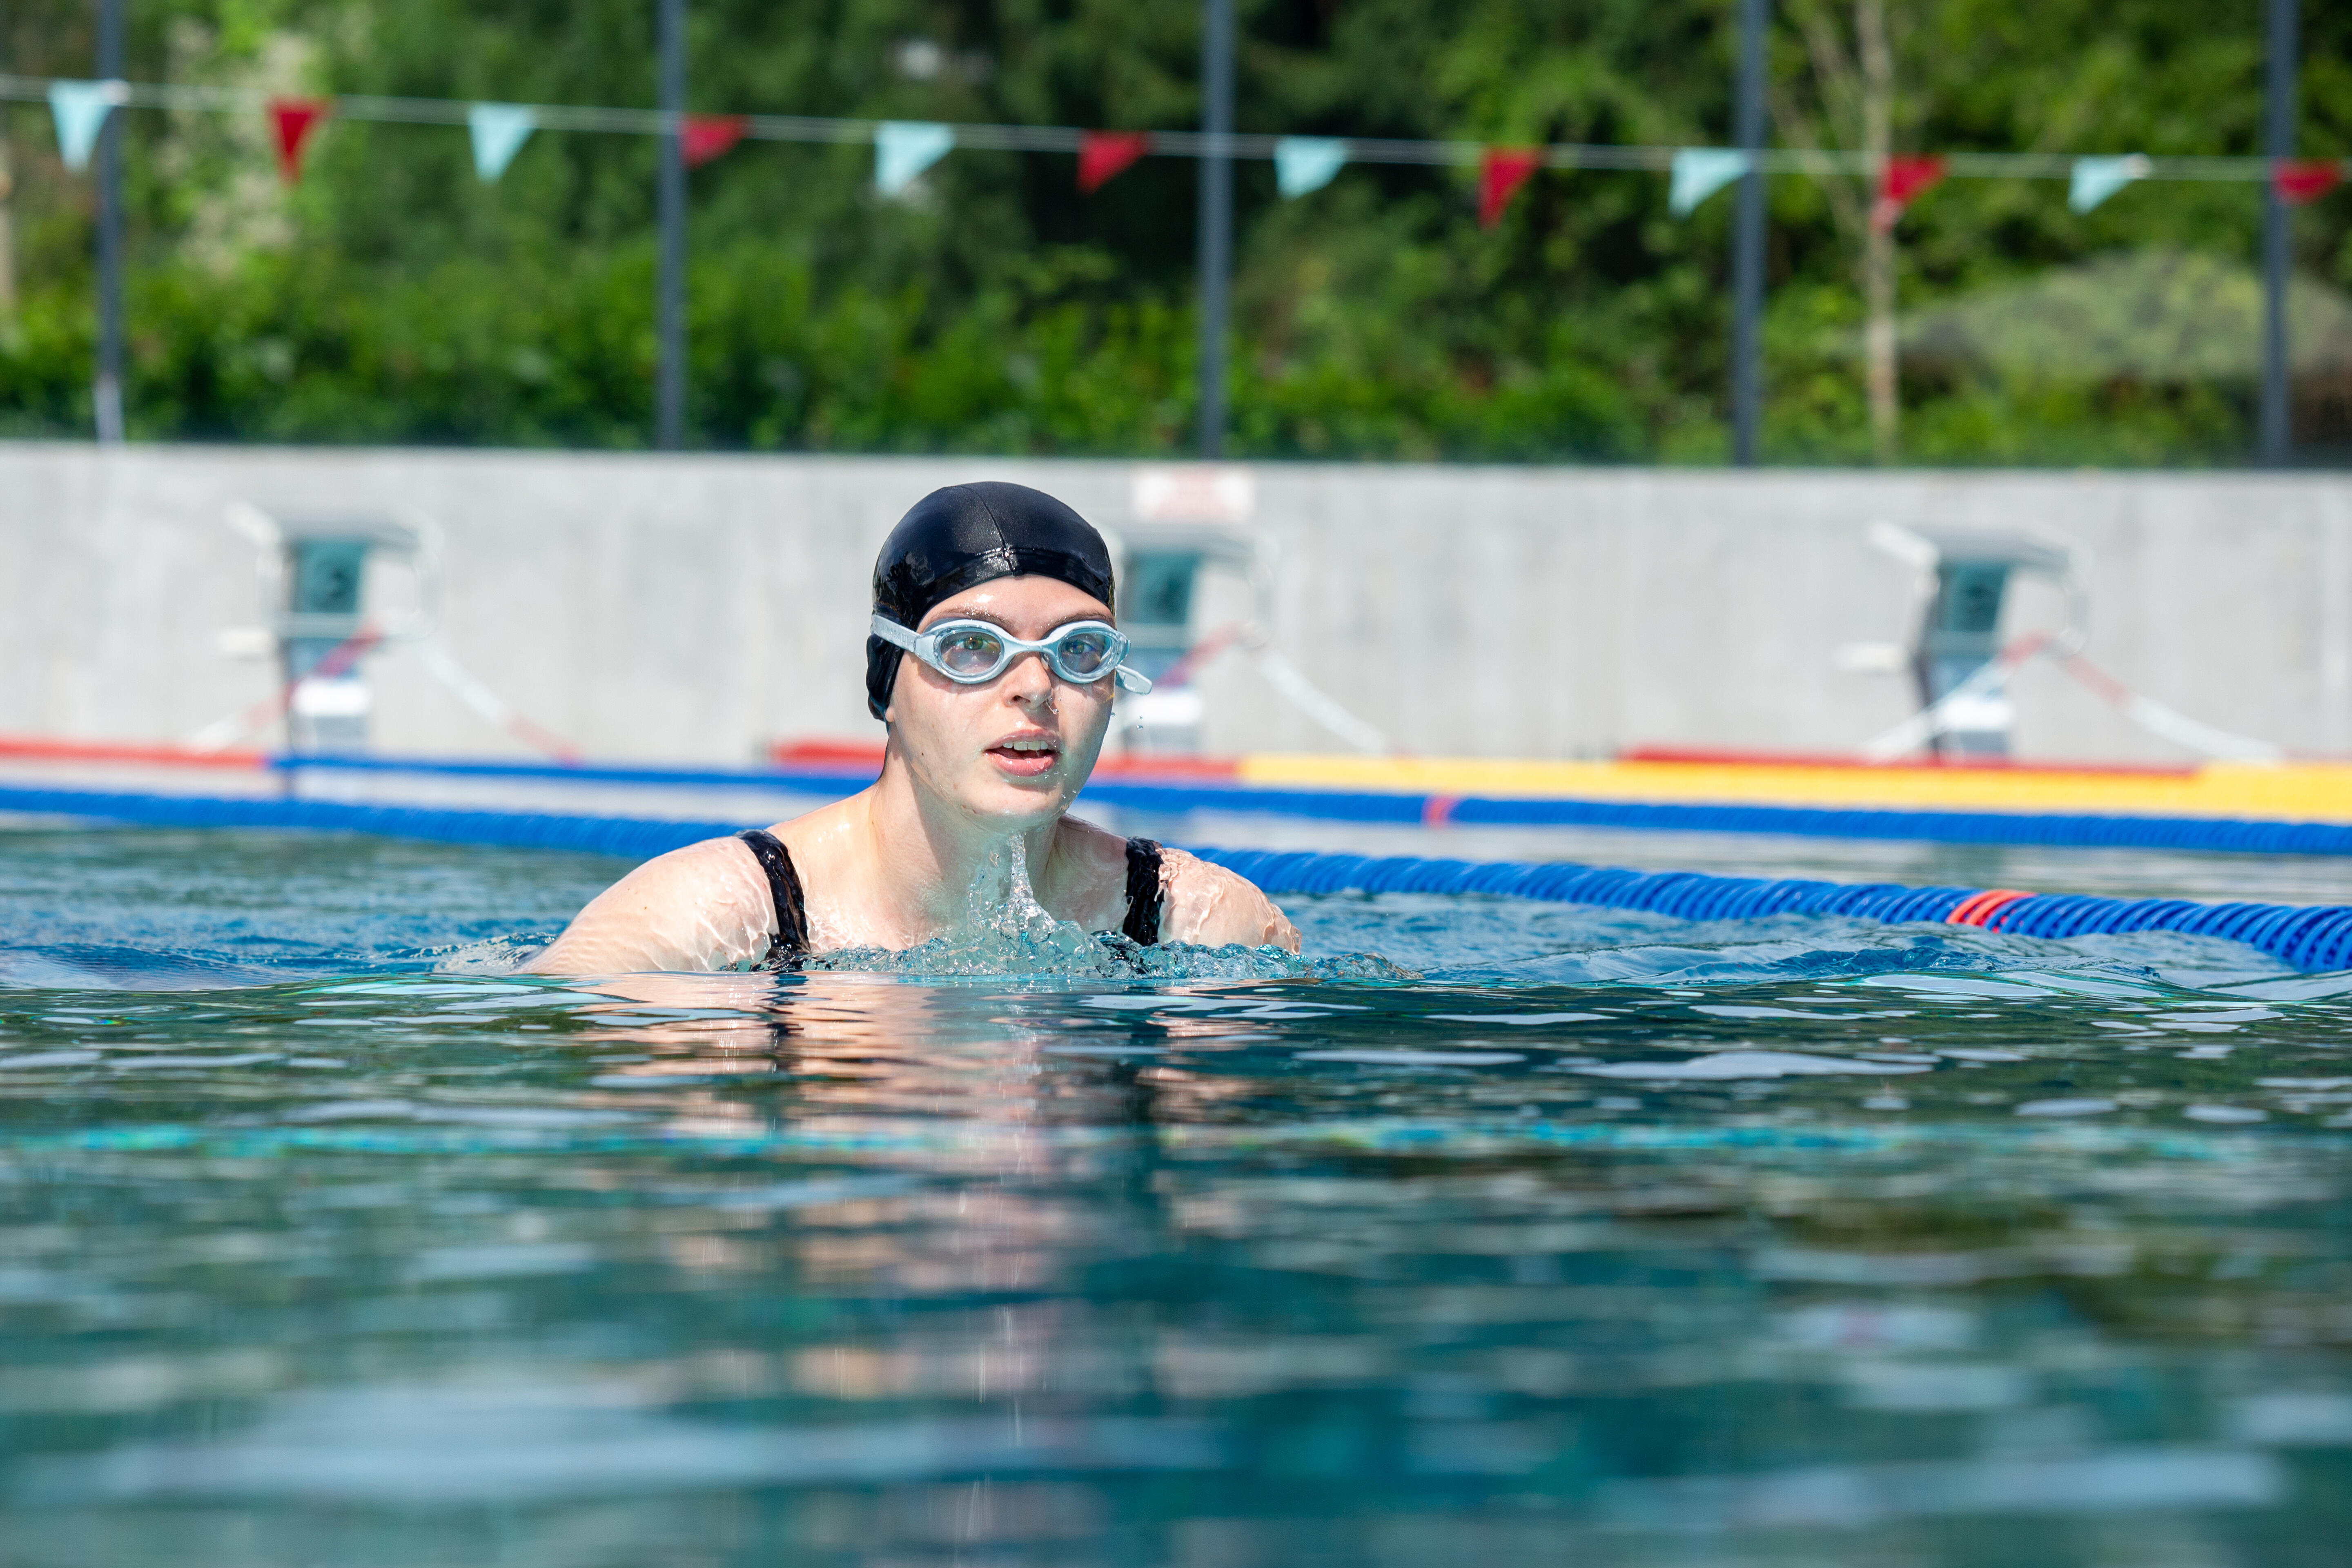 Swimming Goggles Clear Lenses - Ready 100 Grey - NABAIJI